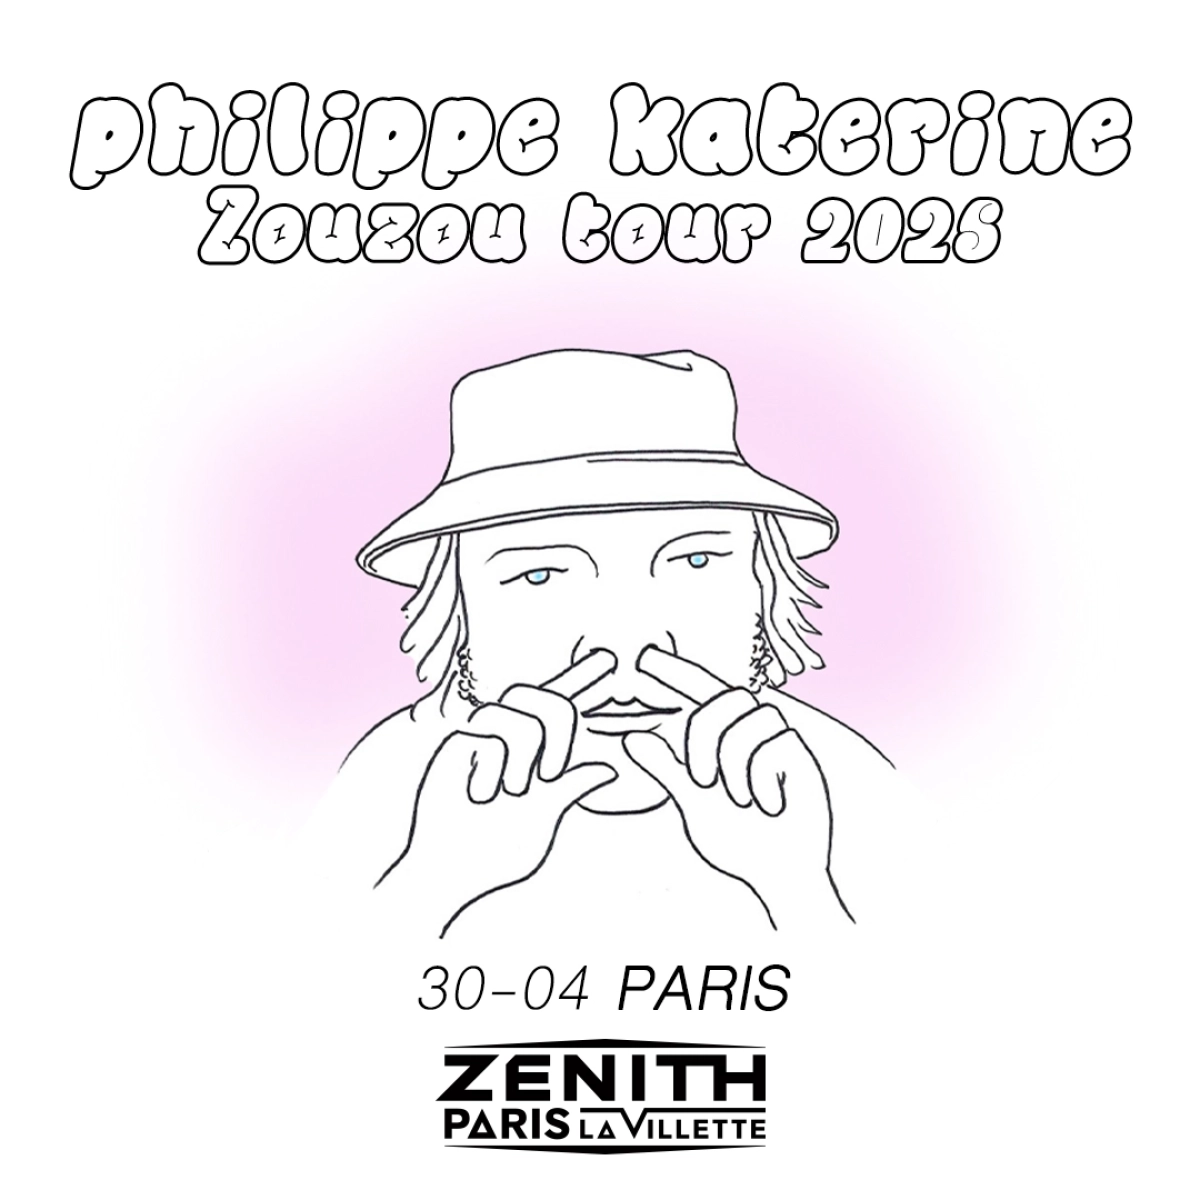 Philippe Katerine at Zenith Paris Tickets